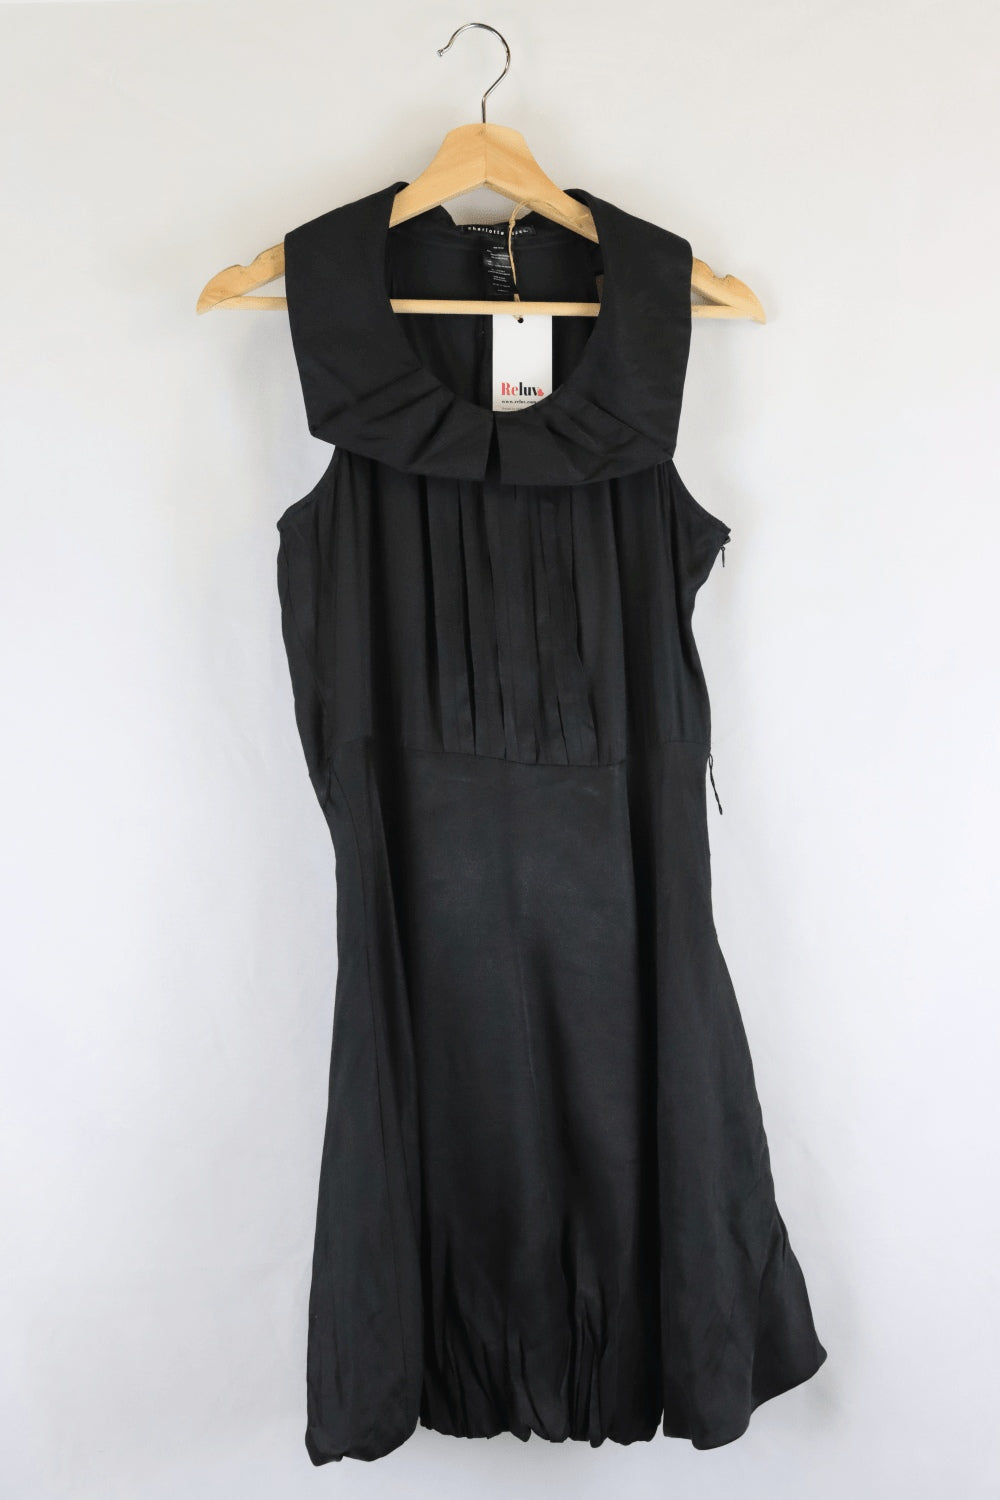 Charlotte Russo Black Dress S